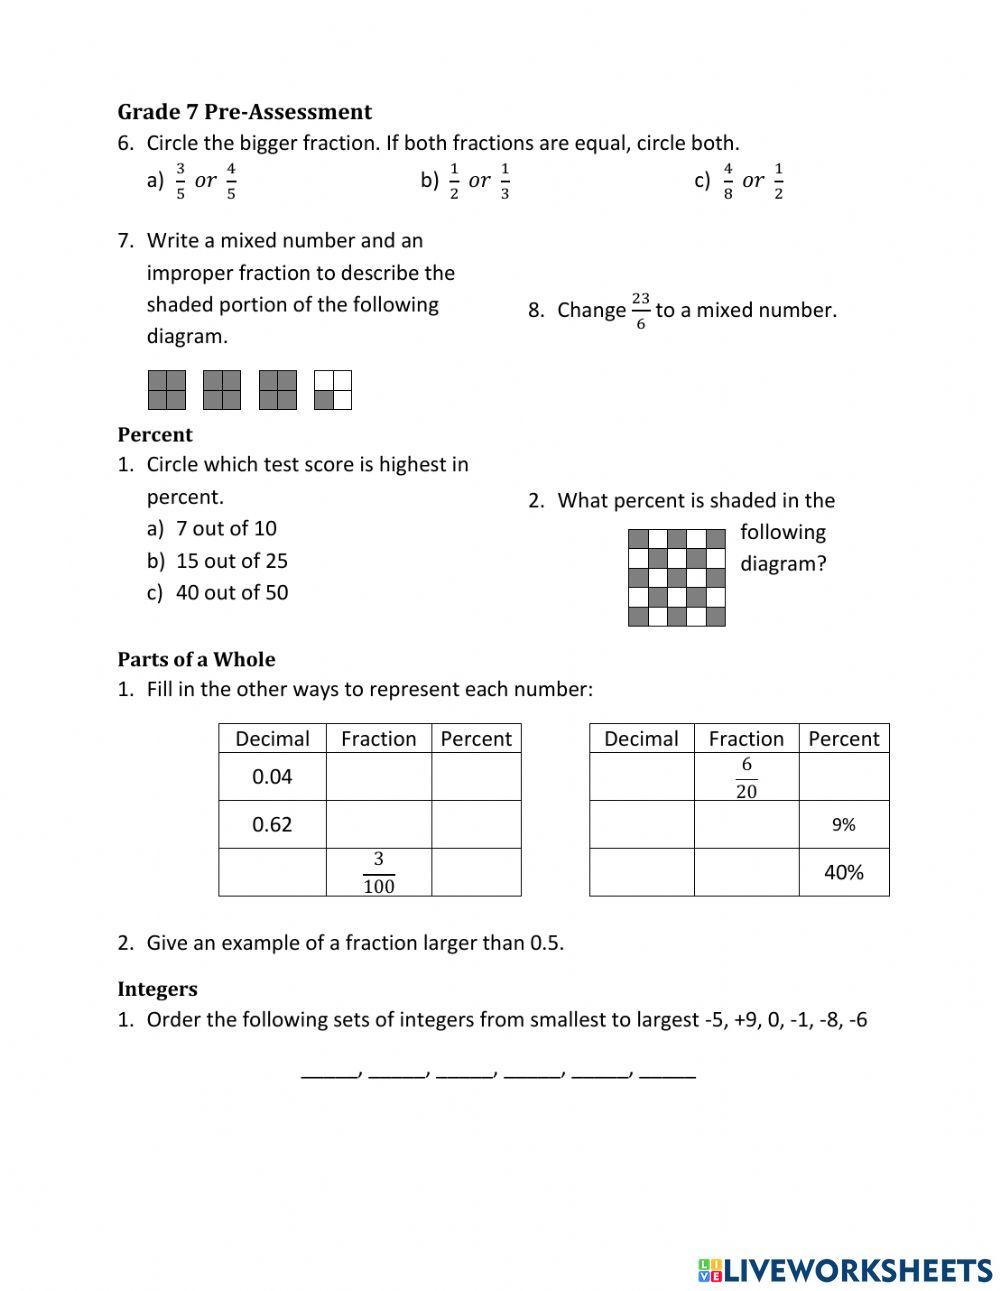 Grade 7 math Diagnostic Test - 2